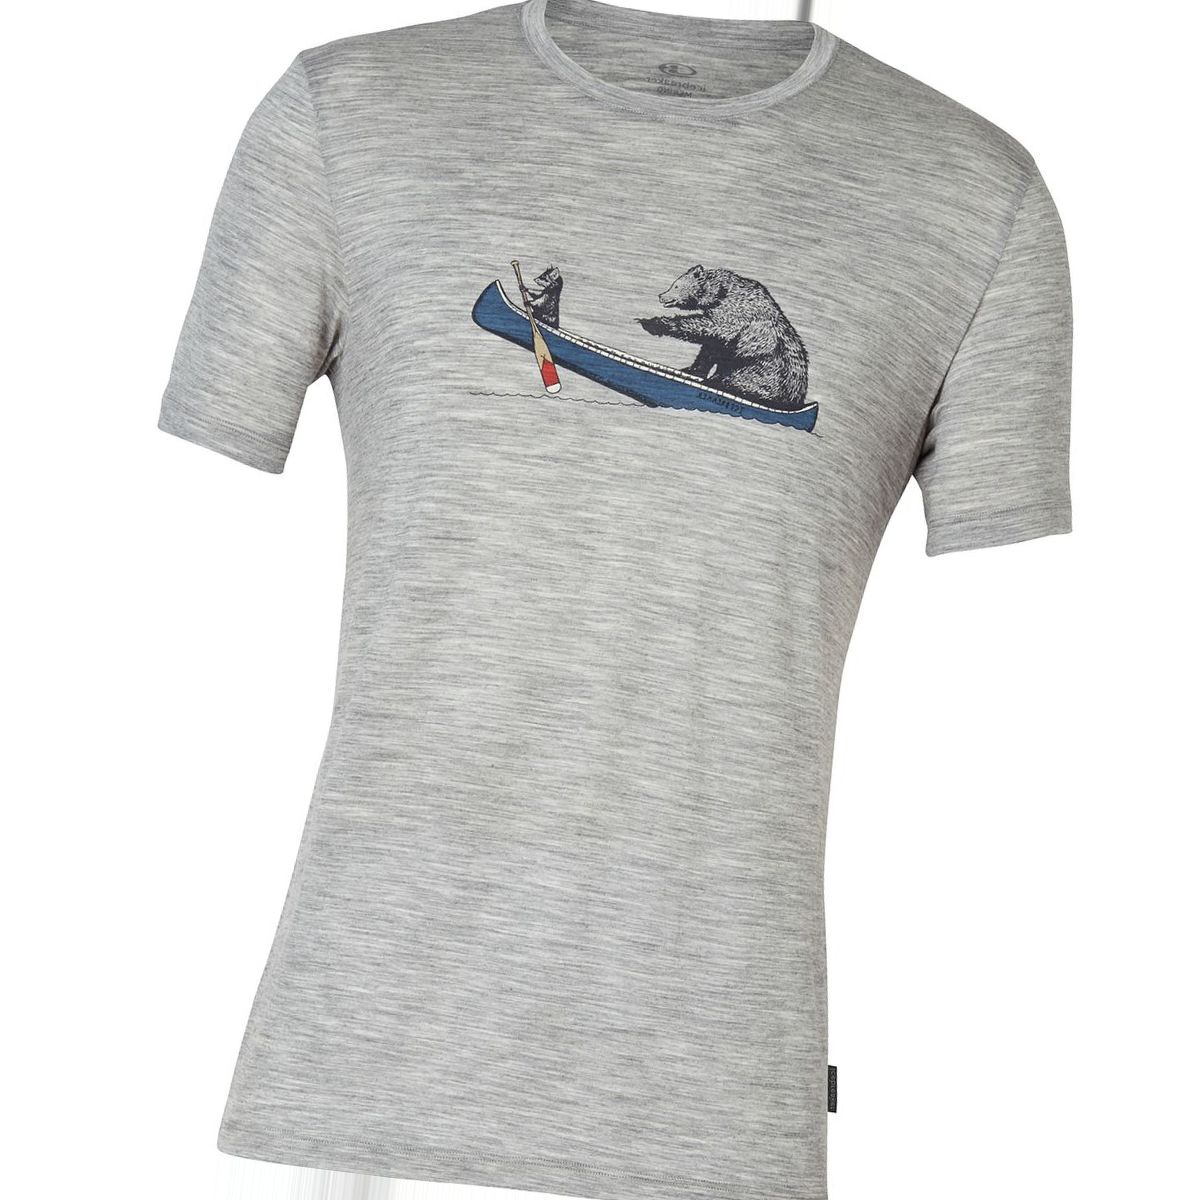 Icebreaker Tech Lite Graphic Short-Sleeve Crewe Shirt - Men's